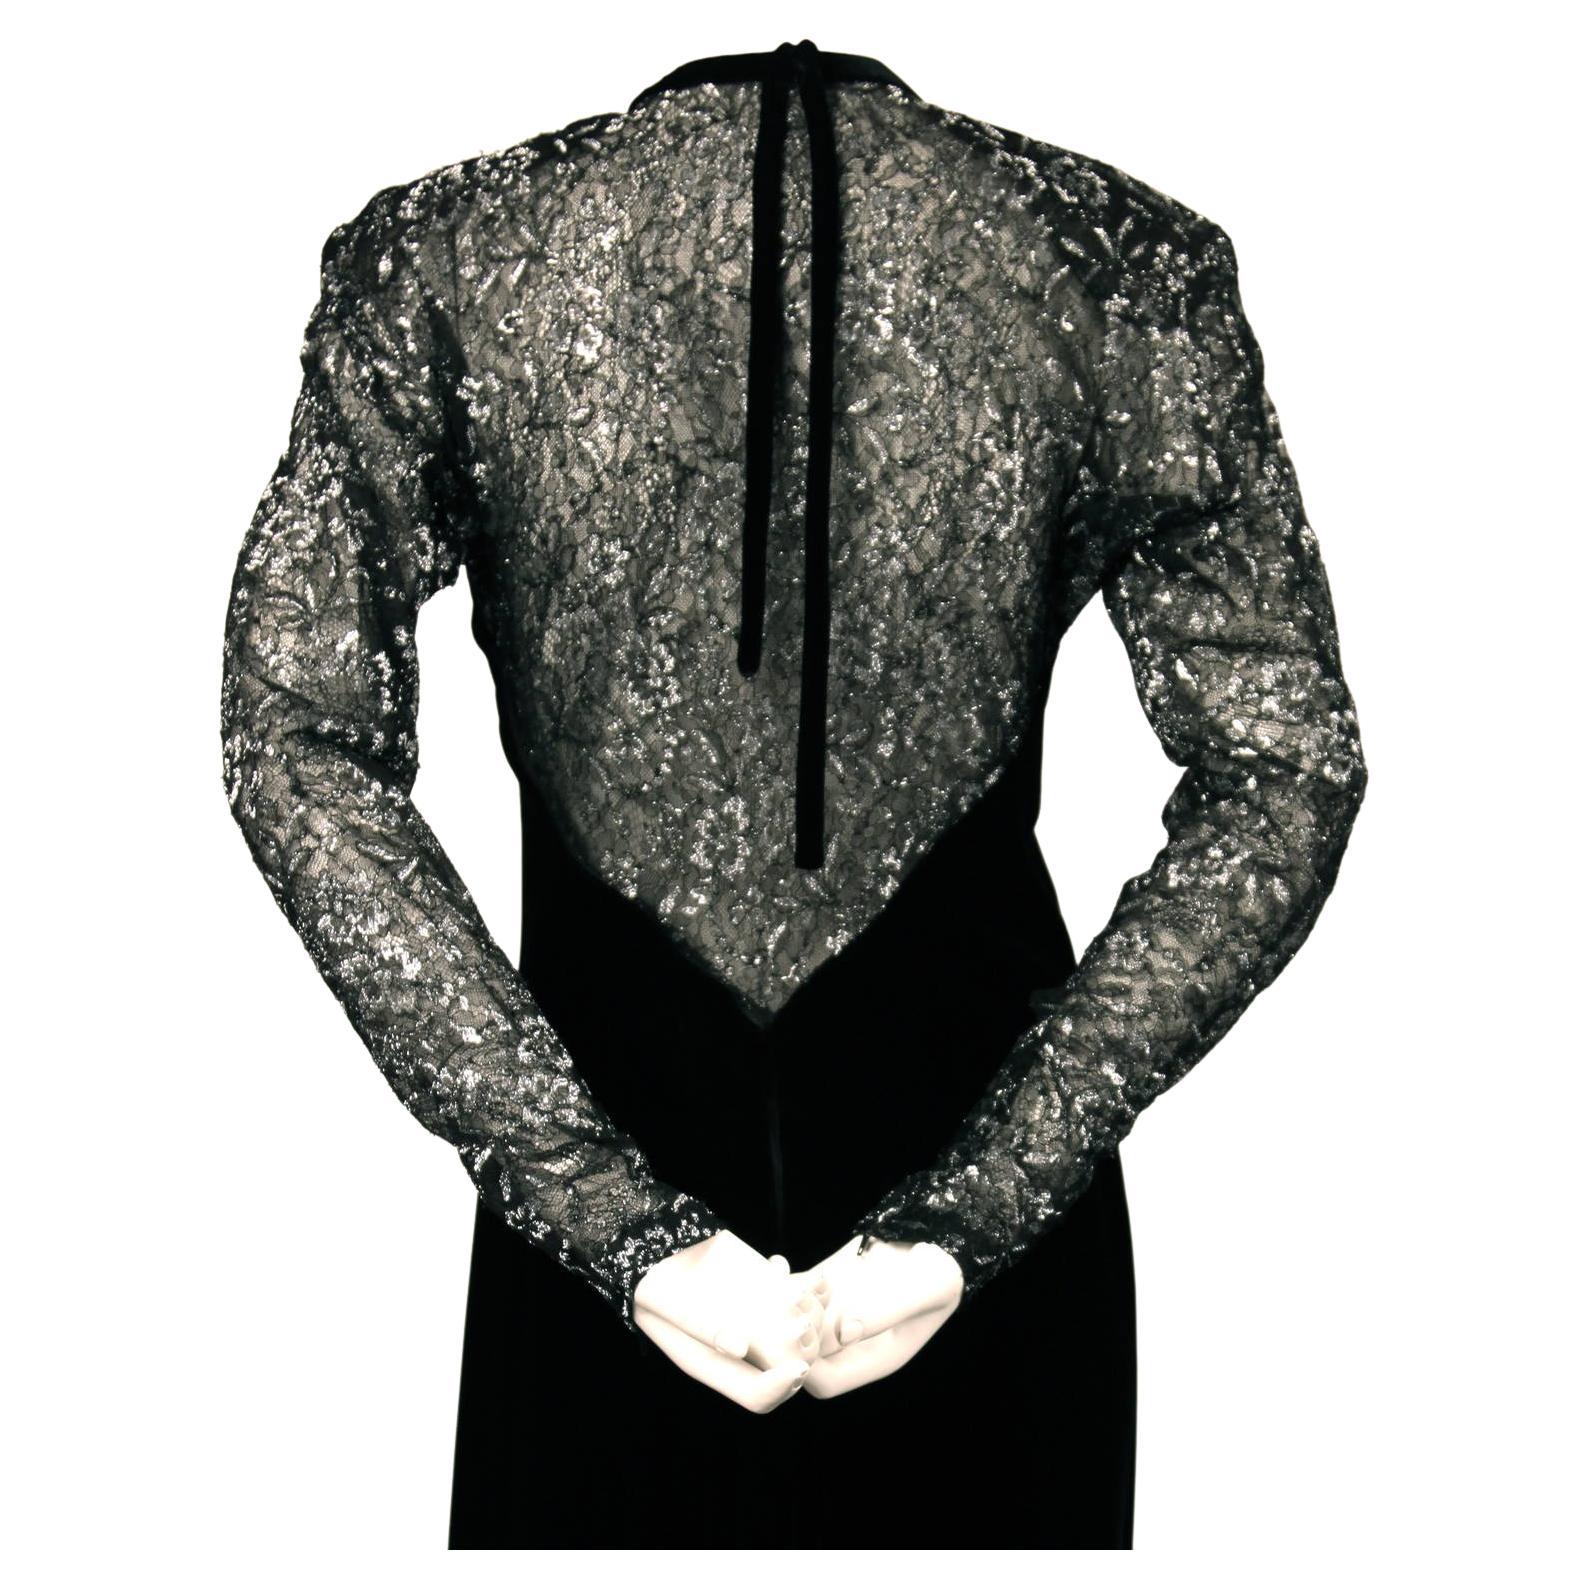 Jacqueline De Ribes black velvet gown with sheer lace panels For Sale 2